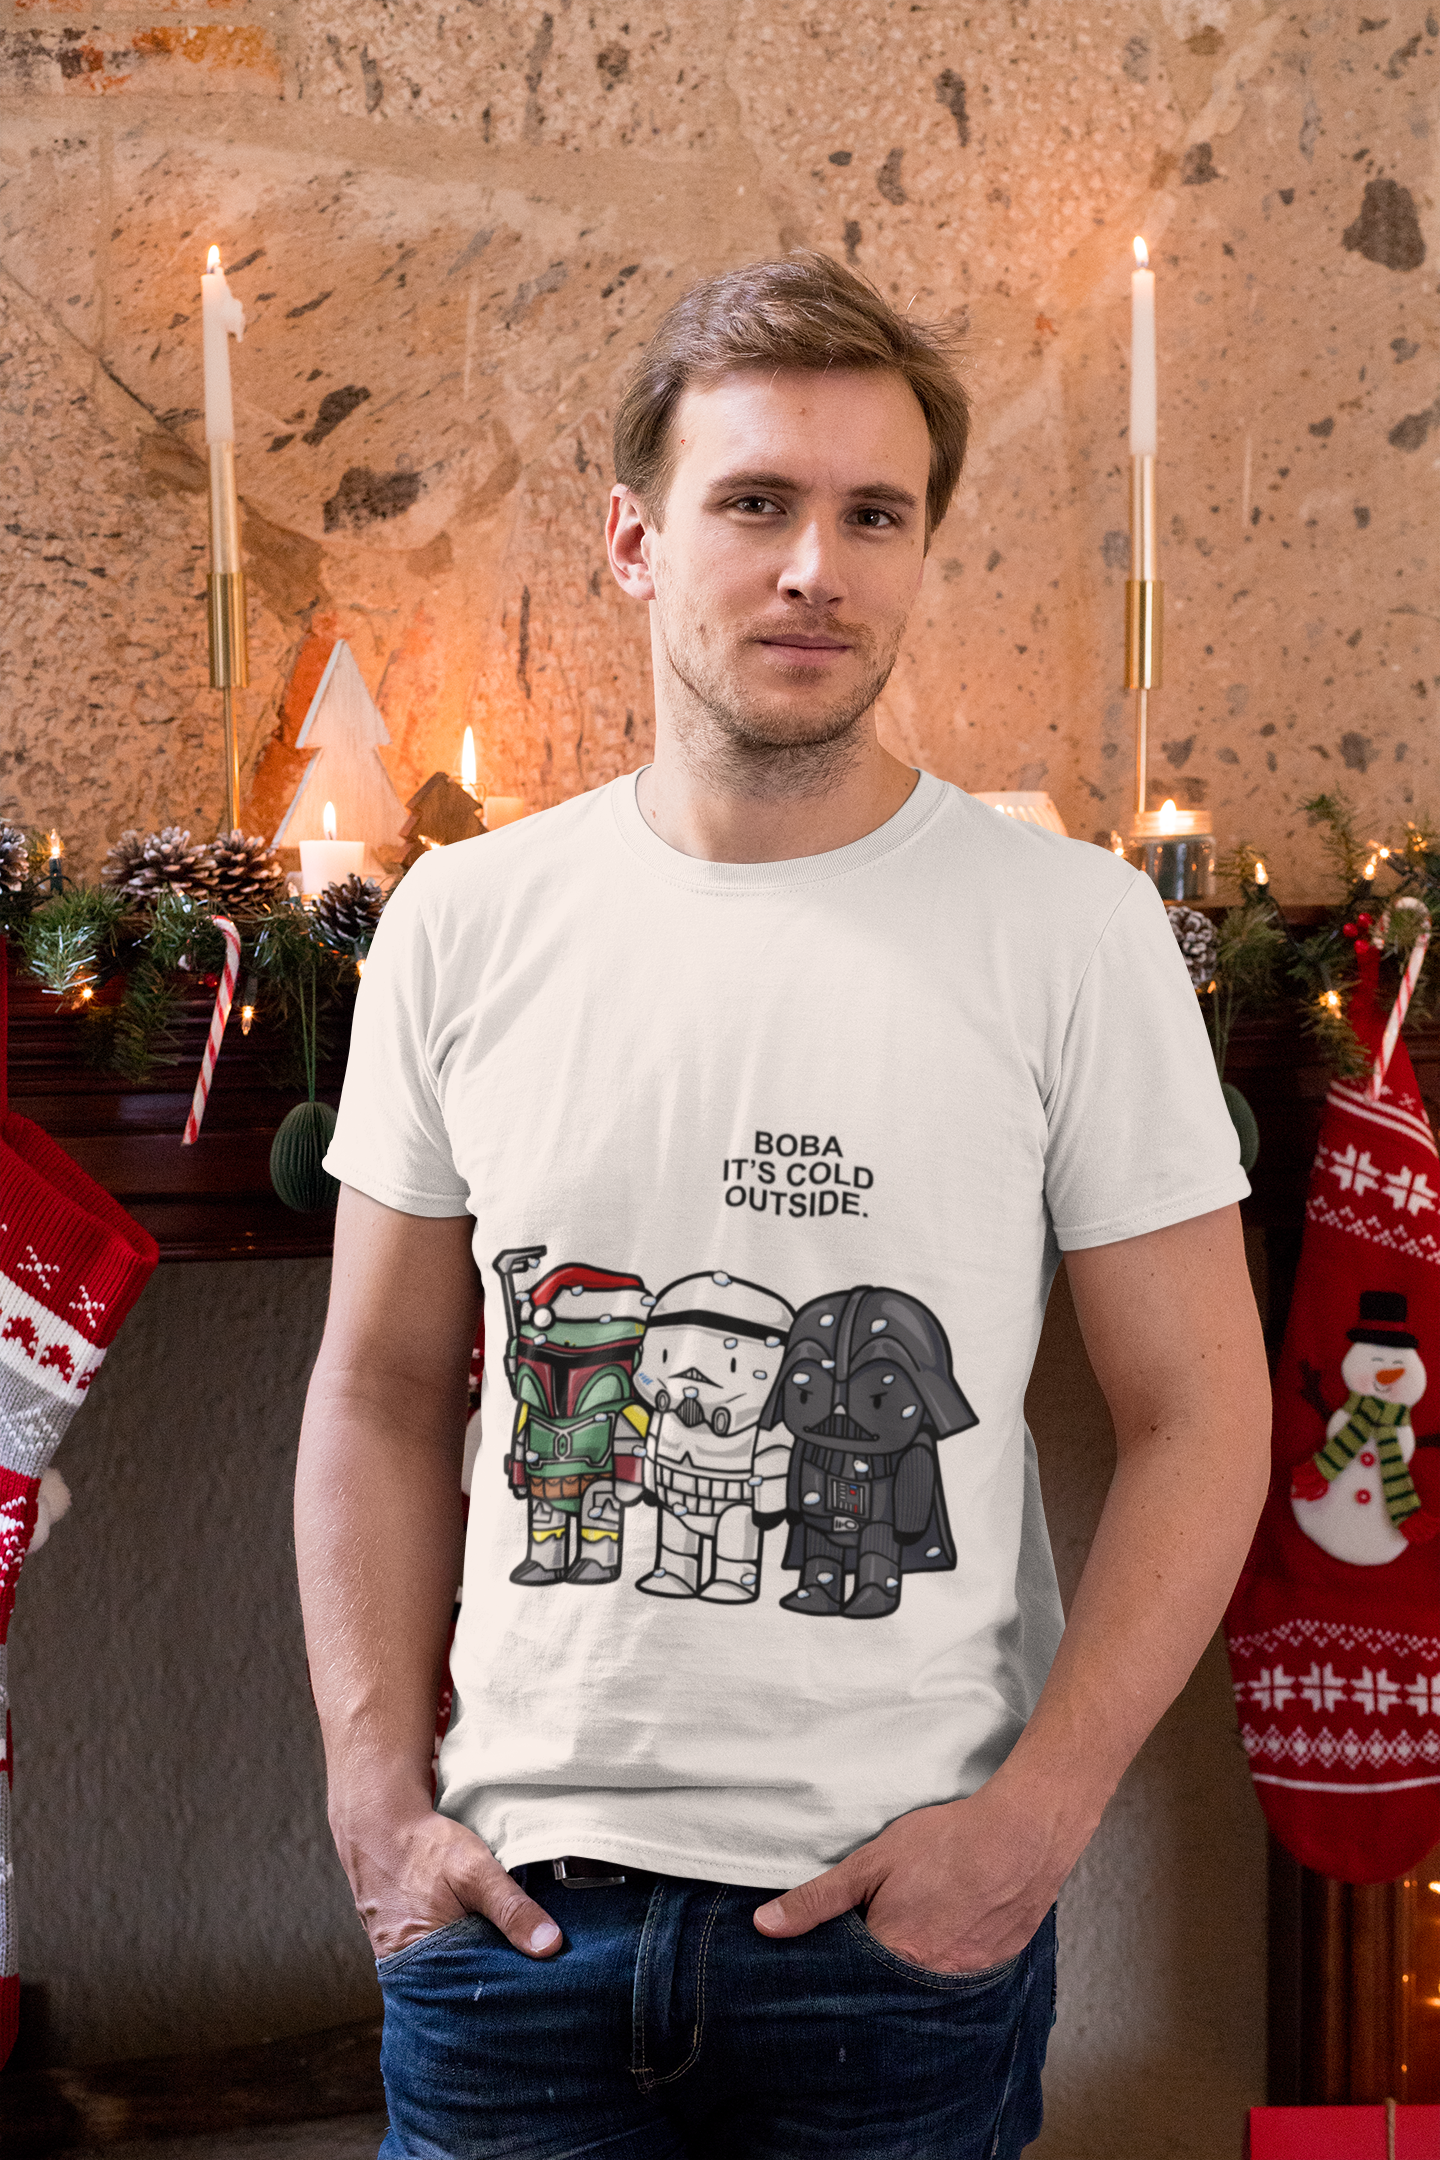 Boba Fett Stormtrooper Darth Vader boba it's cold outside christmas shirt